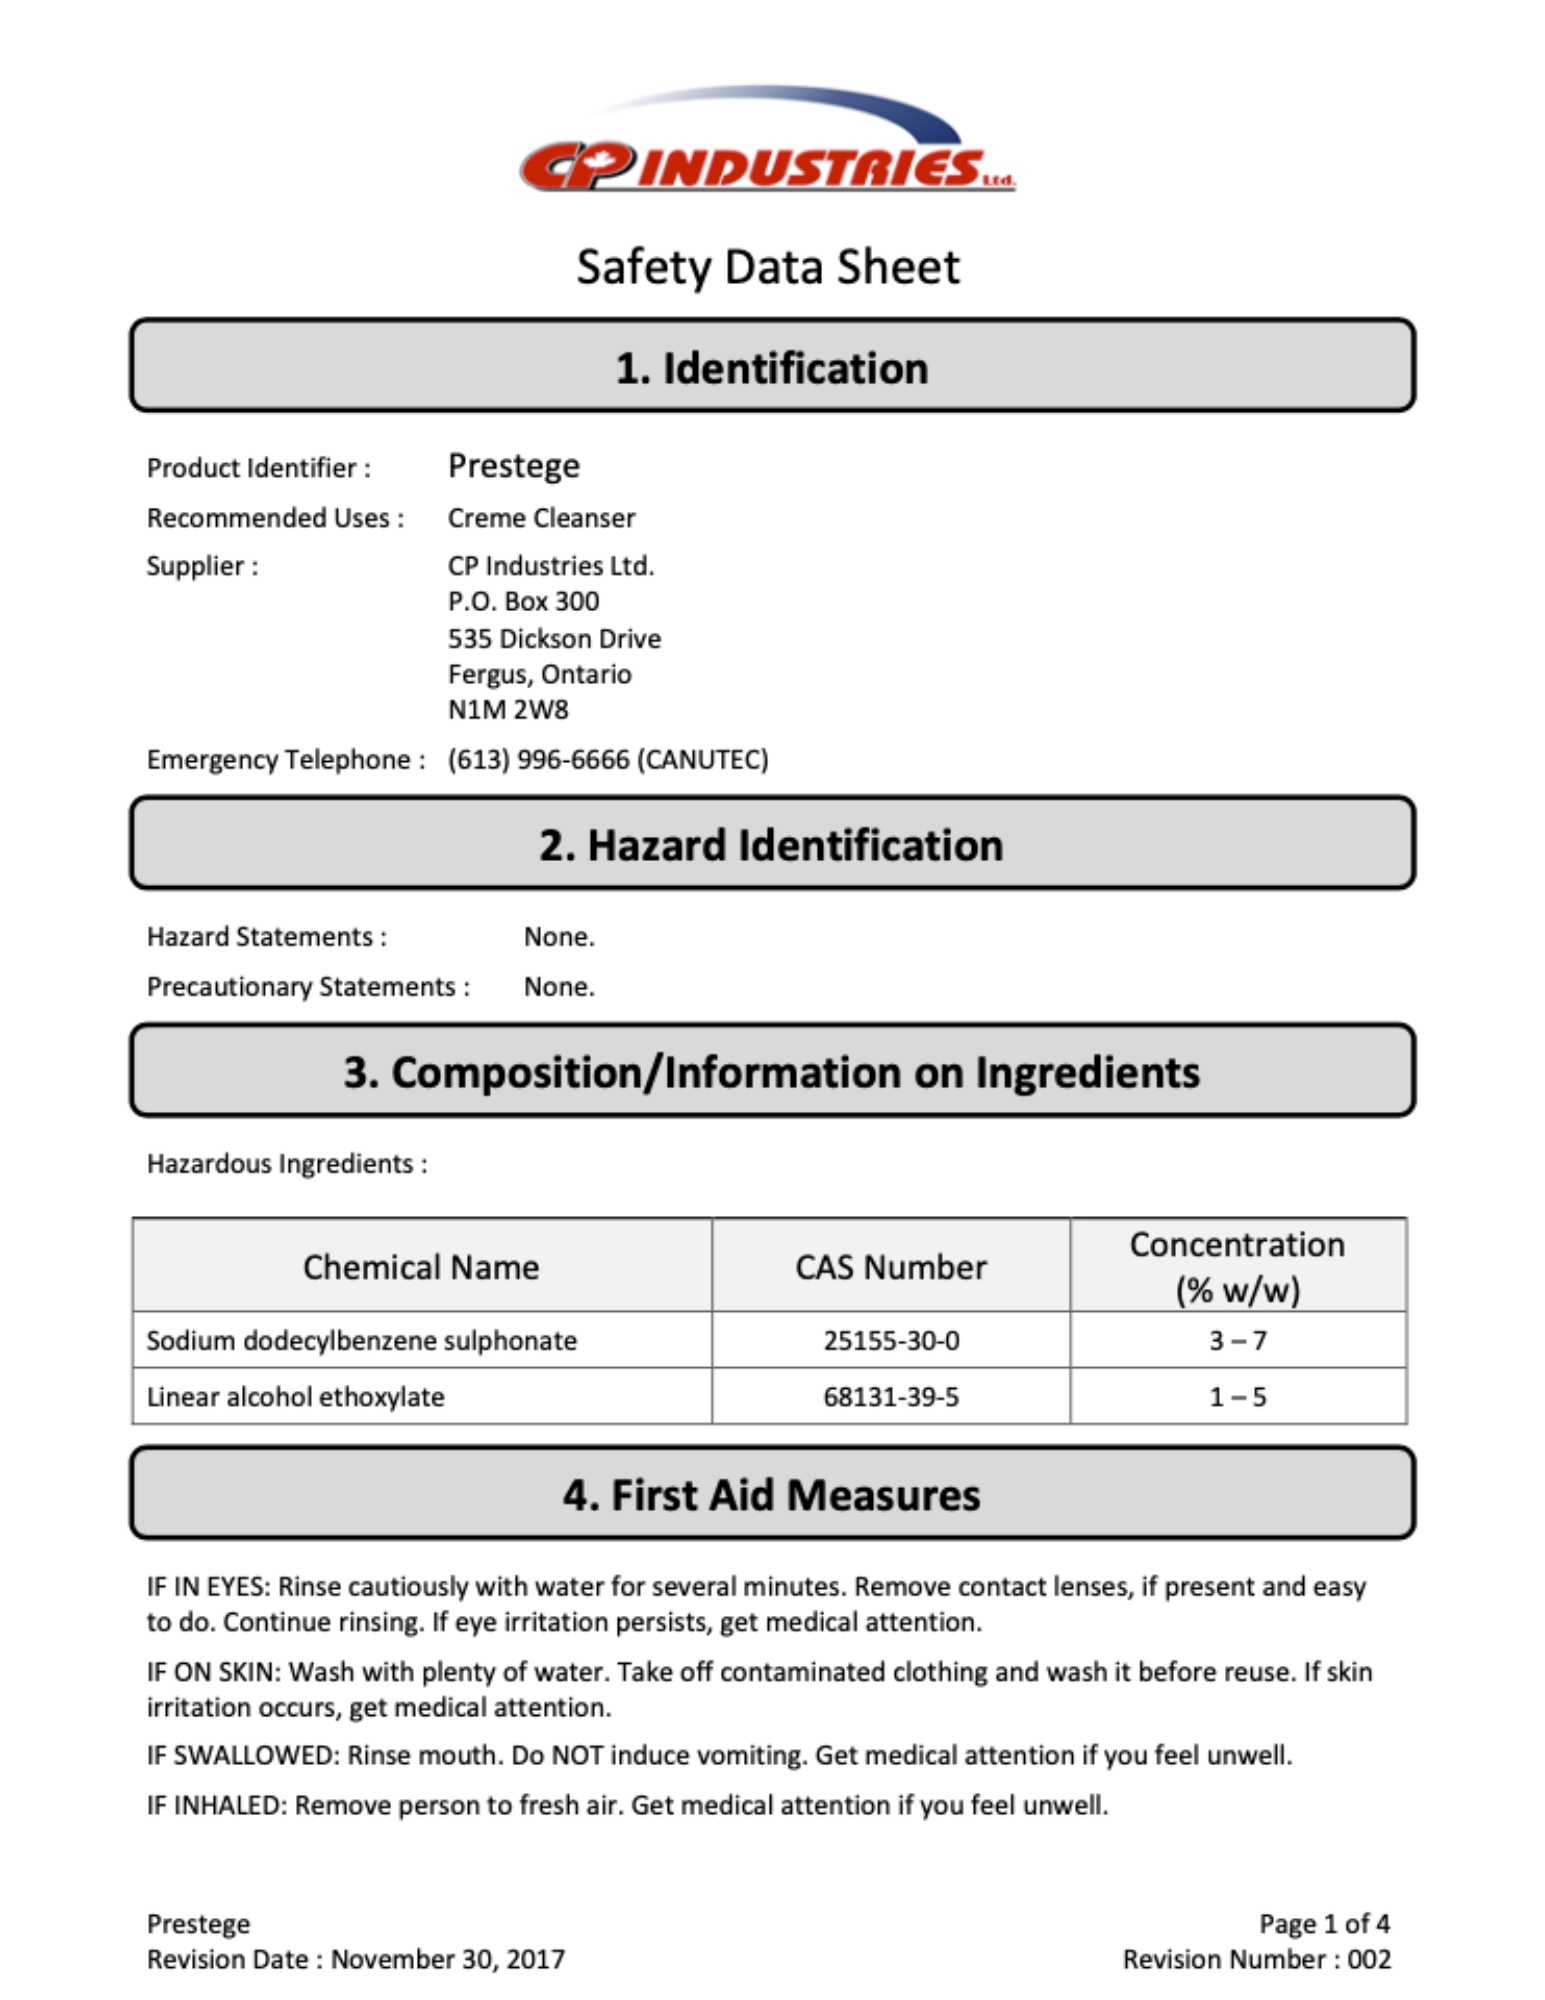 CP Industries safety data sheet on Prestege.